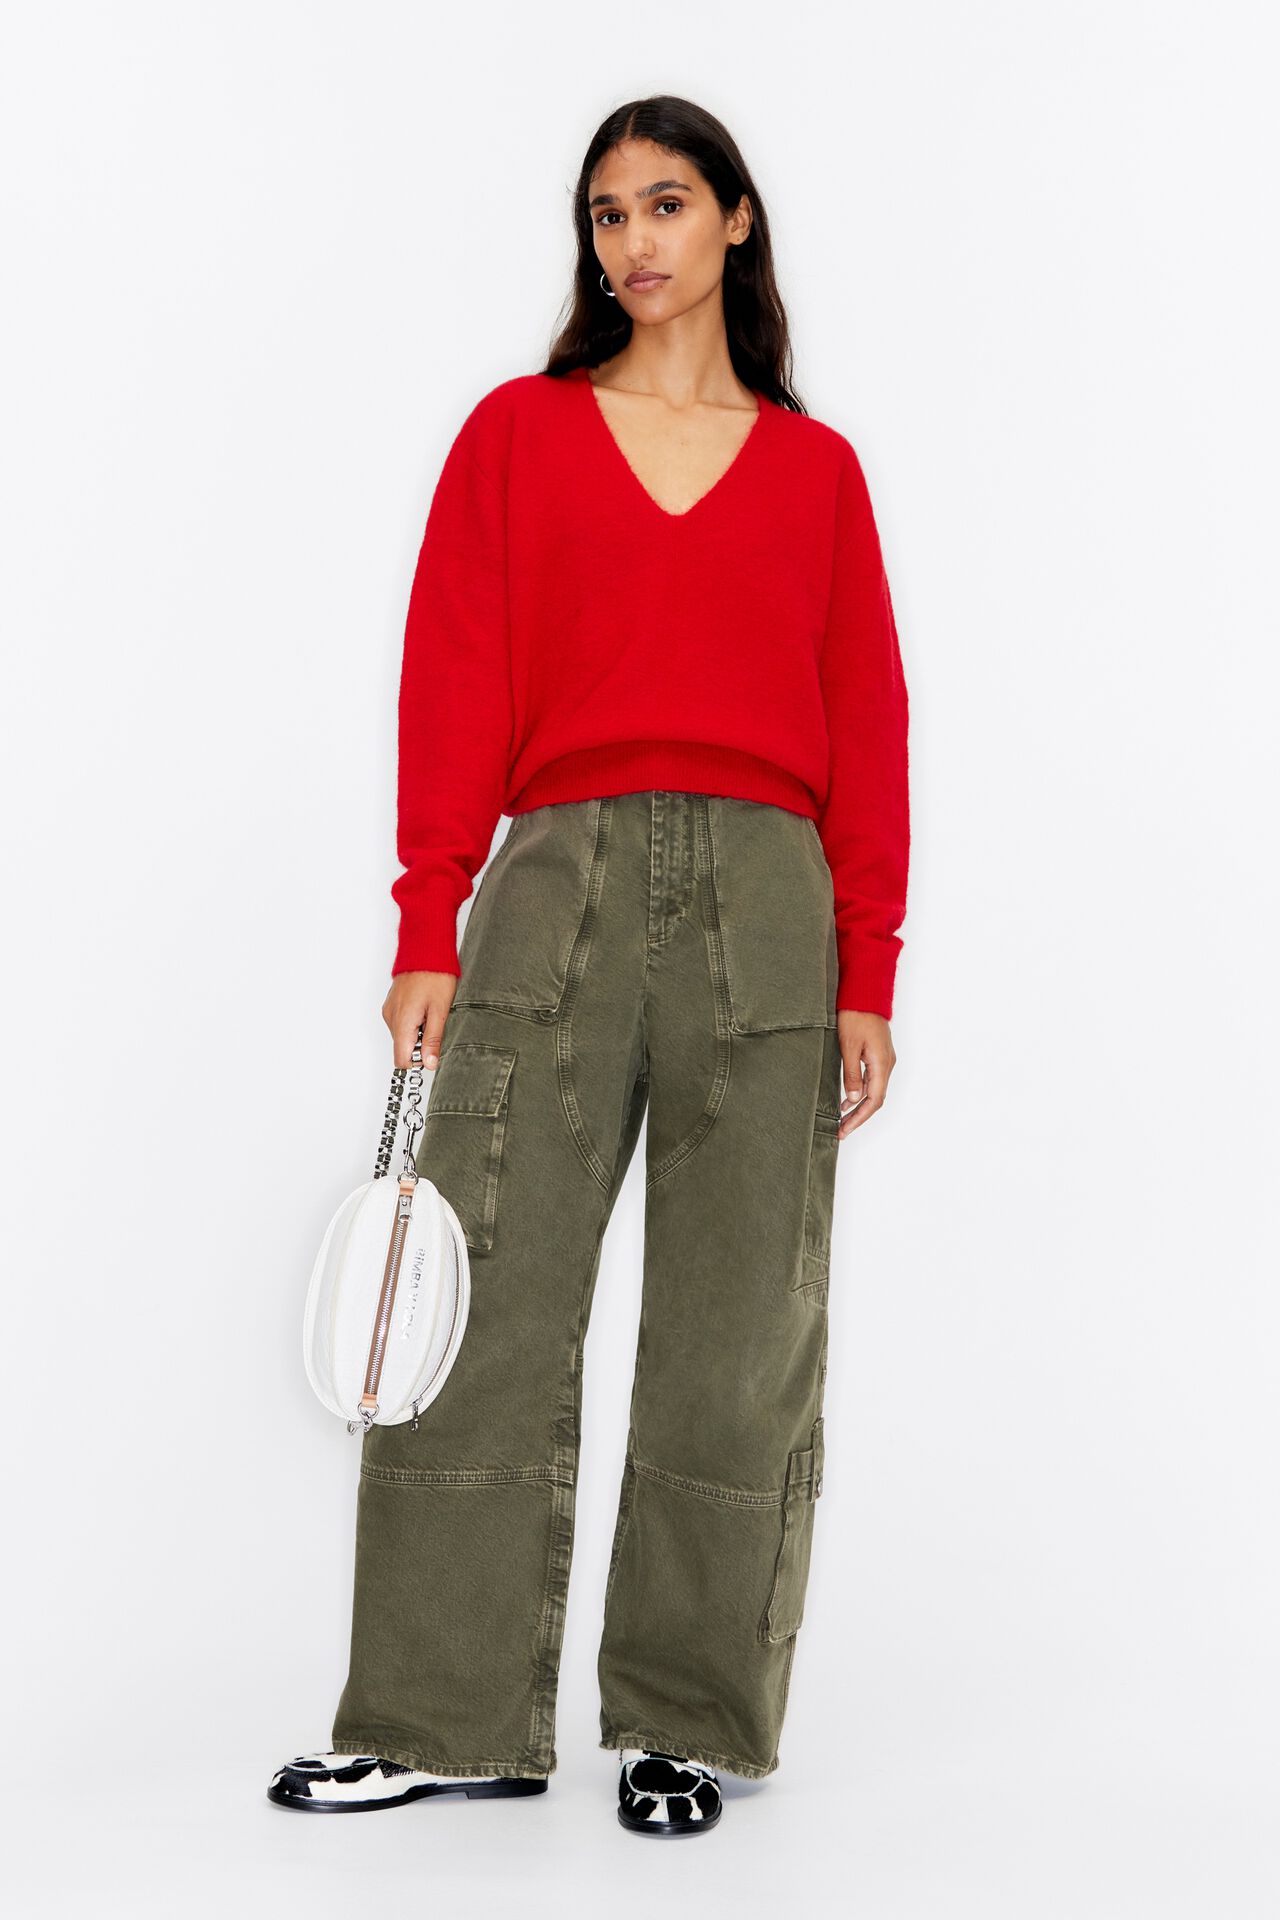 Louis Vuitton SS2017 Red Mohair Knit Sweater - Ākaibu Store